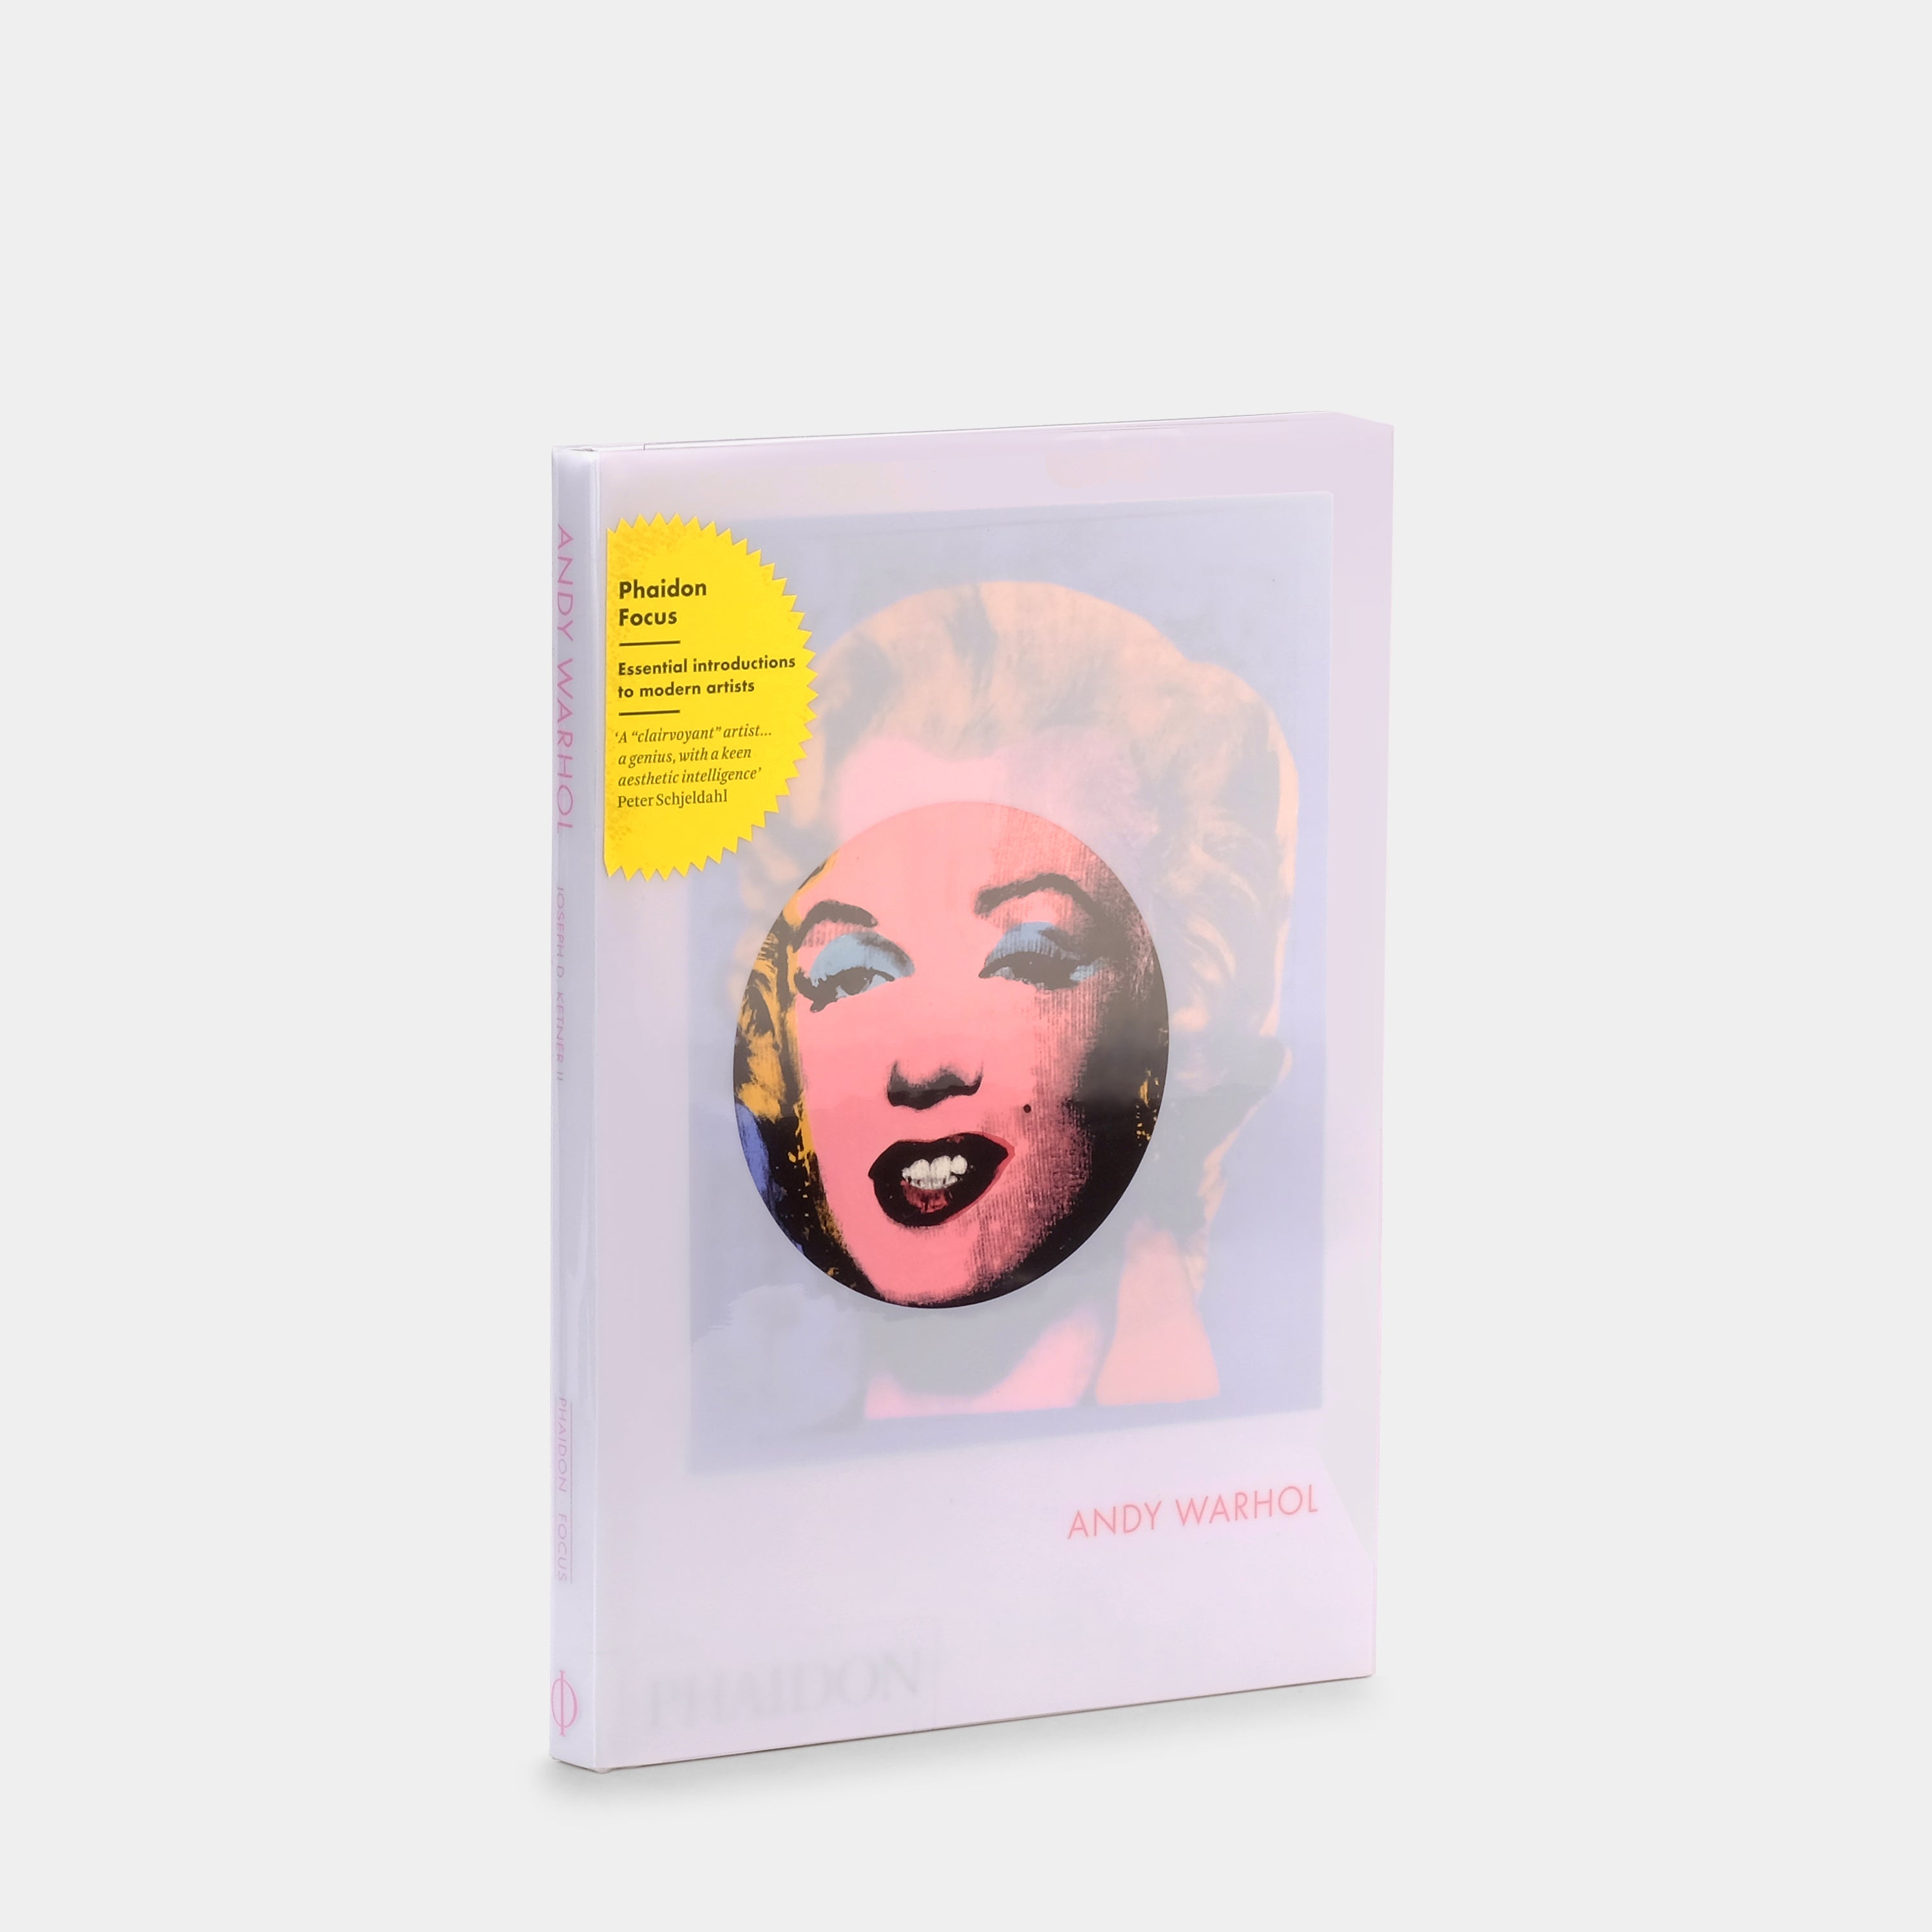 Andy Warhol: Phaidon Focus Book